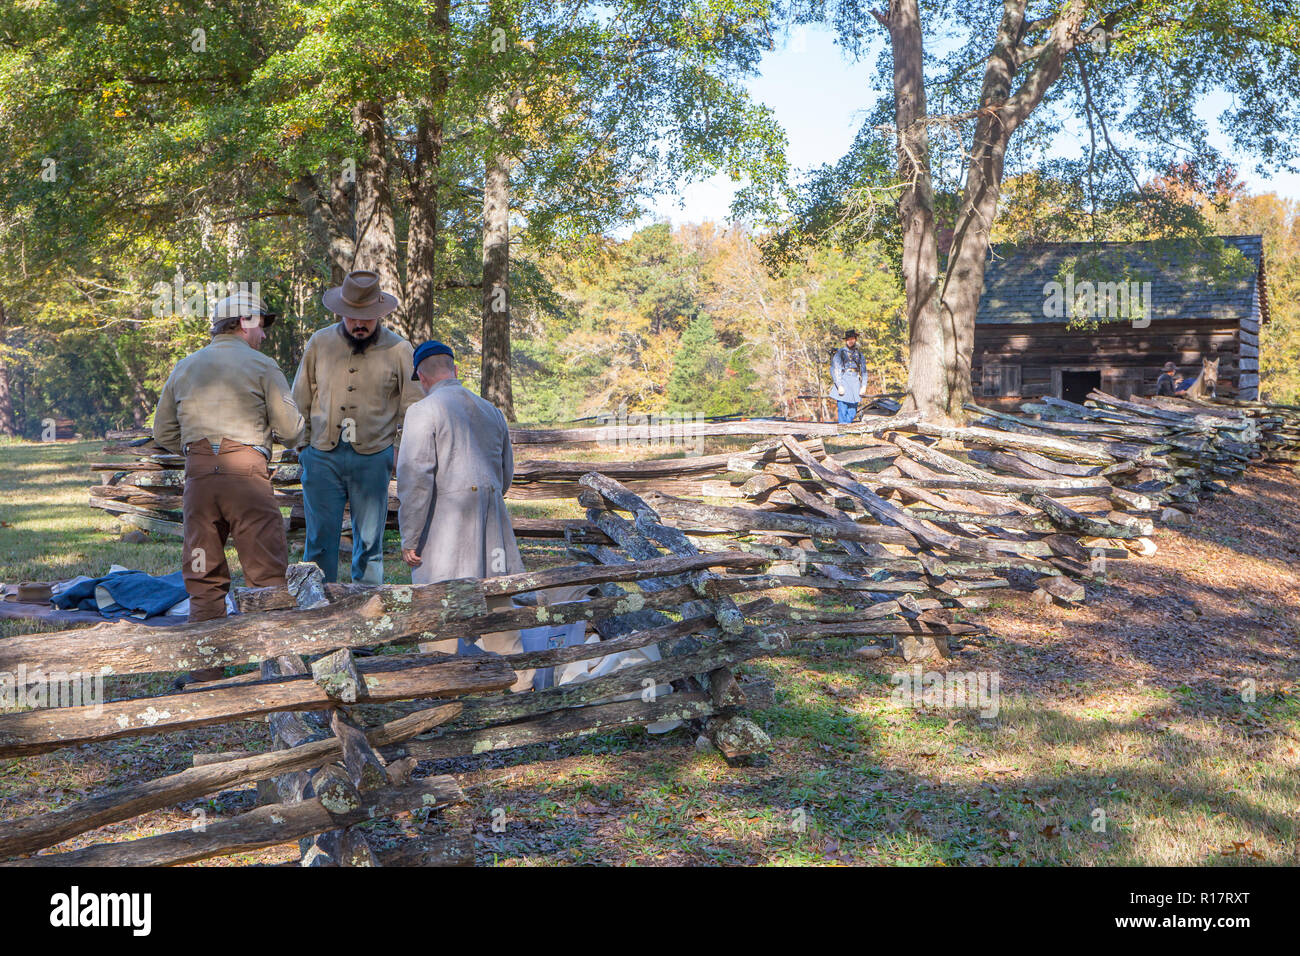 MCCONNELLS, SC (USA) - November 3, 2018:  Reenactors in Confederate uniforms participate in a recreation of the American Civil War. Stock Photo